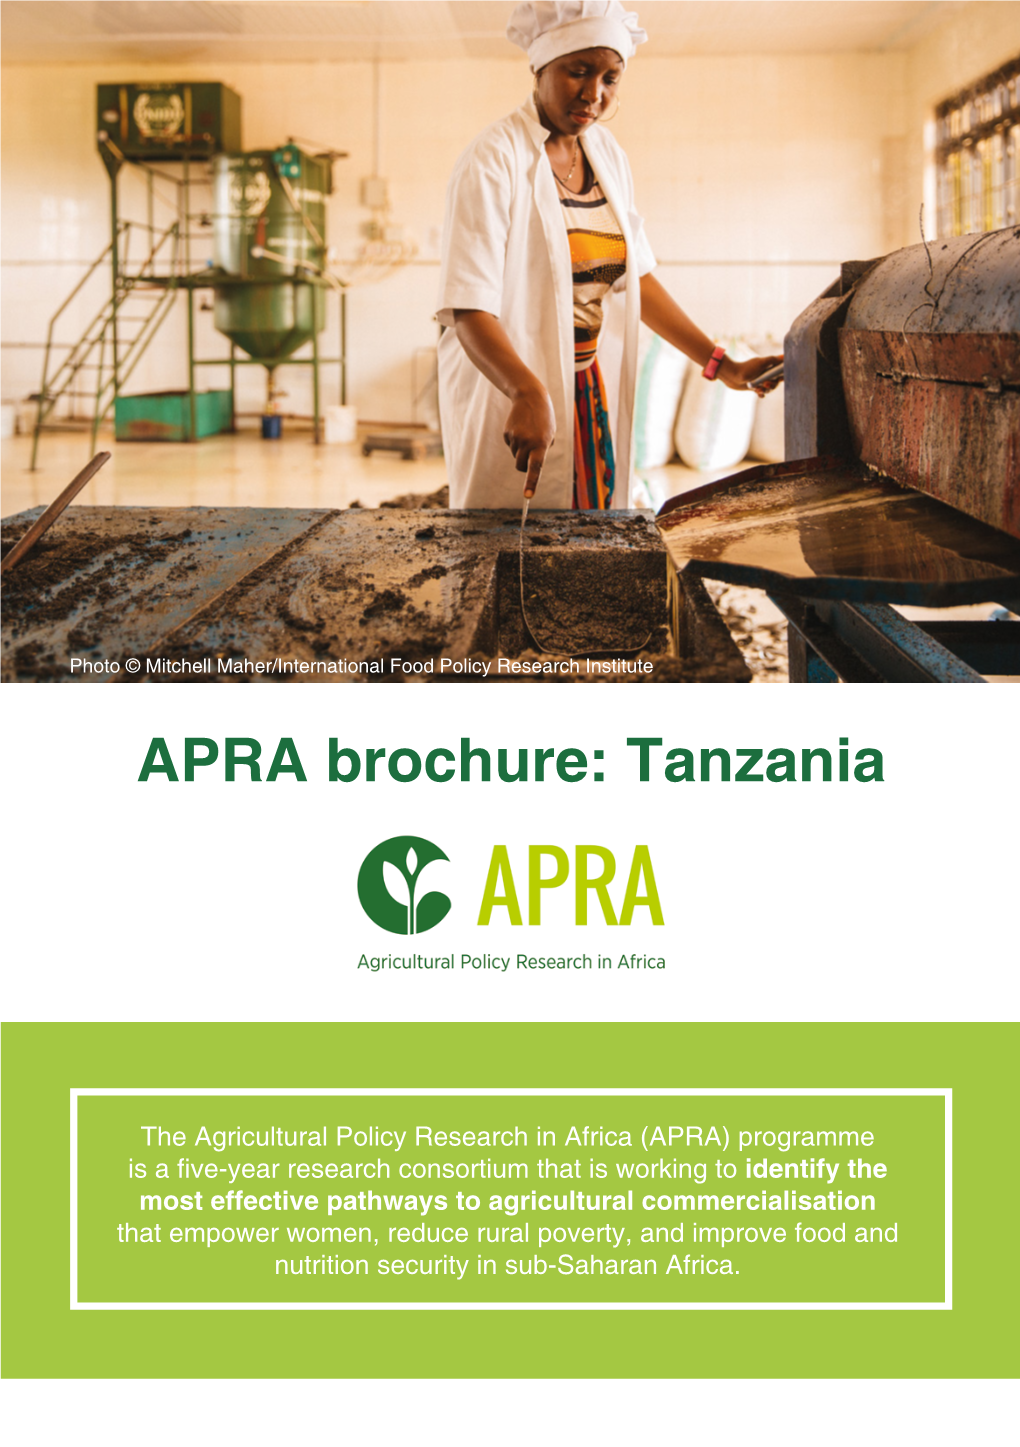 APRA Brochure: Tanzania